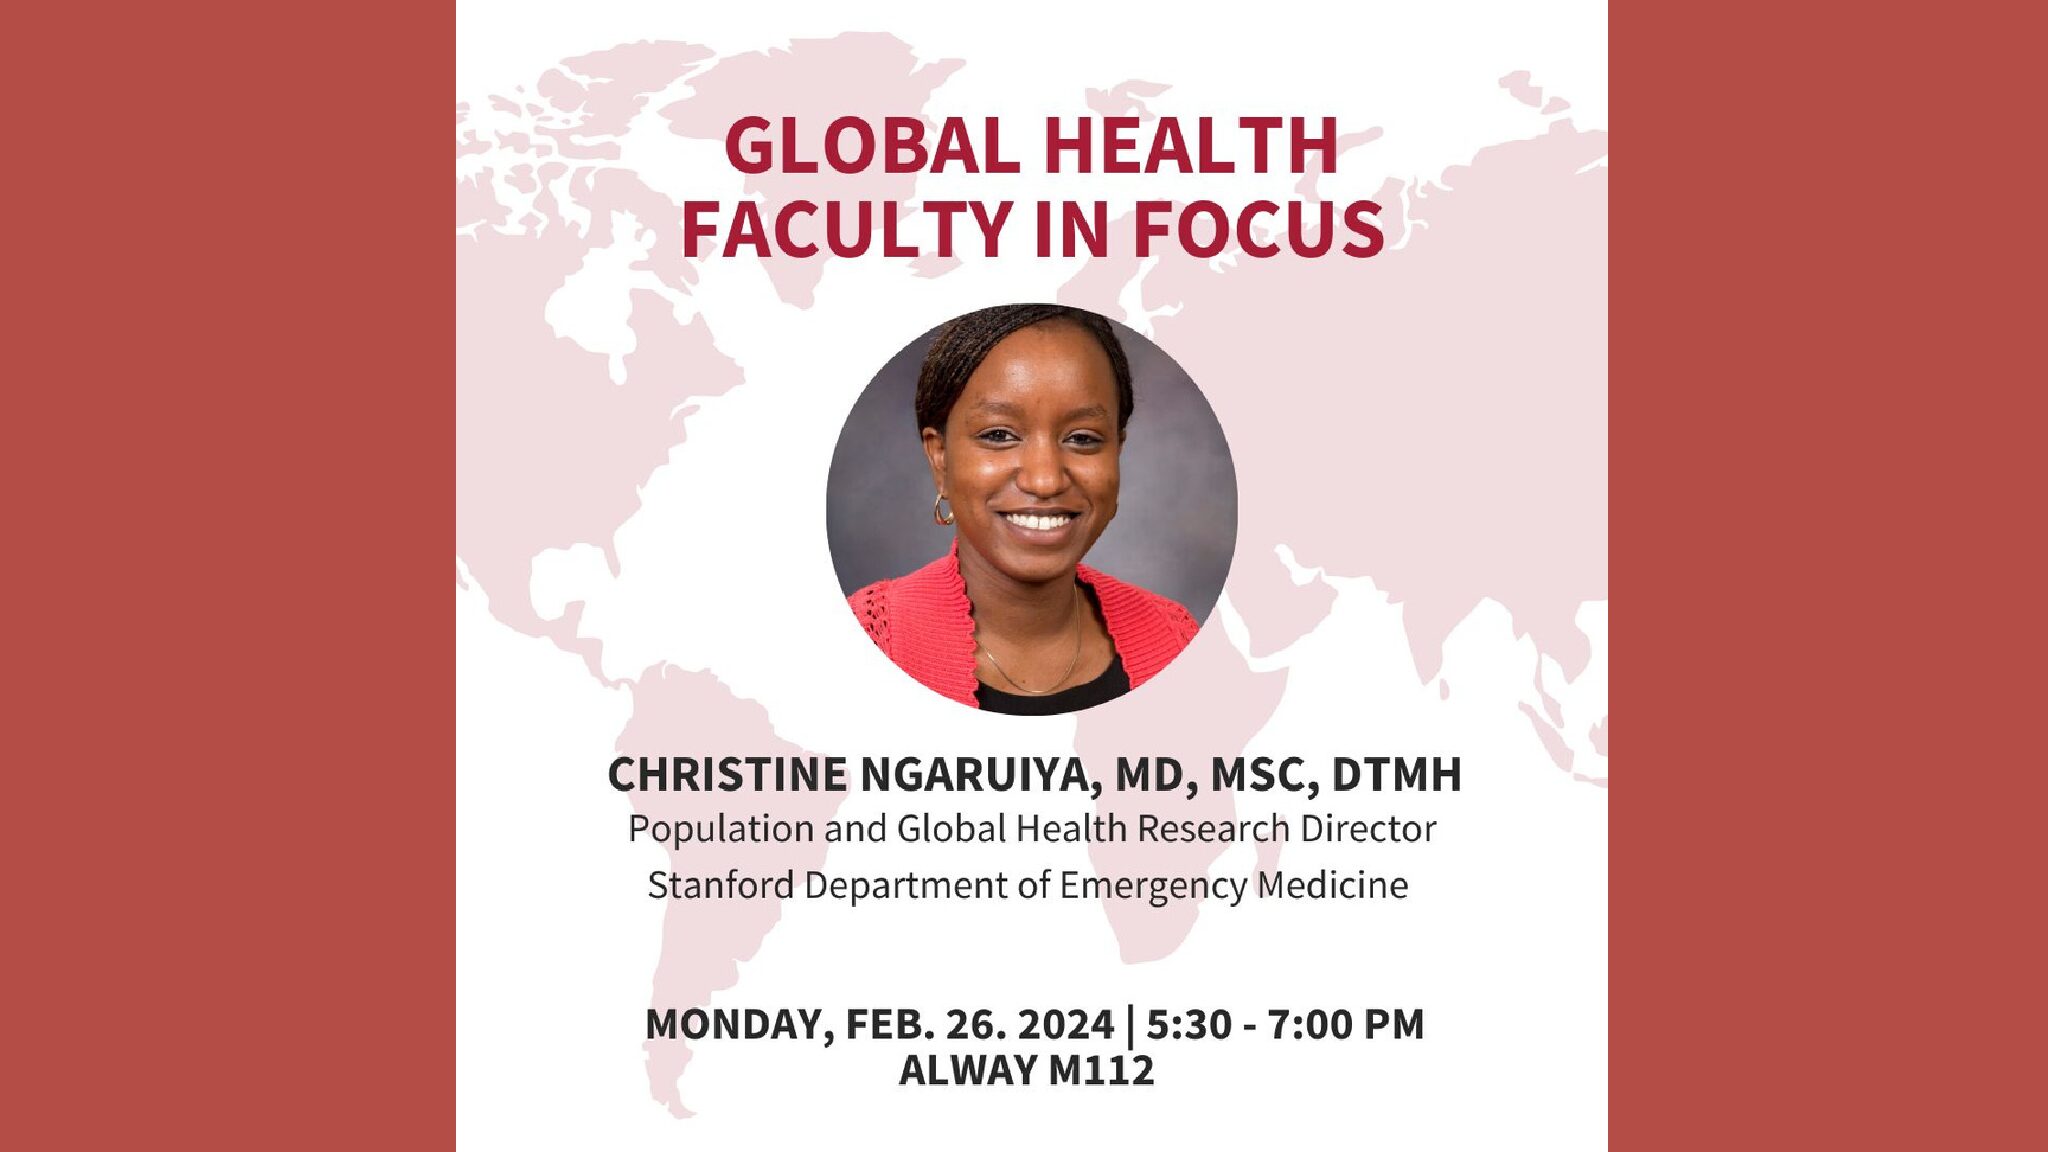 Global Health Faculty in Focus with Christine Ngaruiya